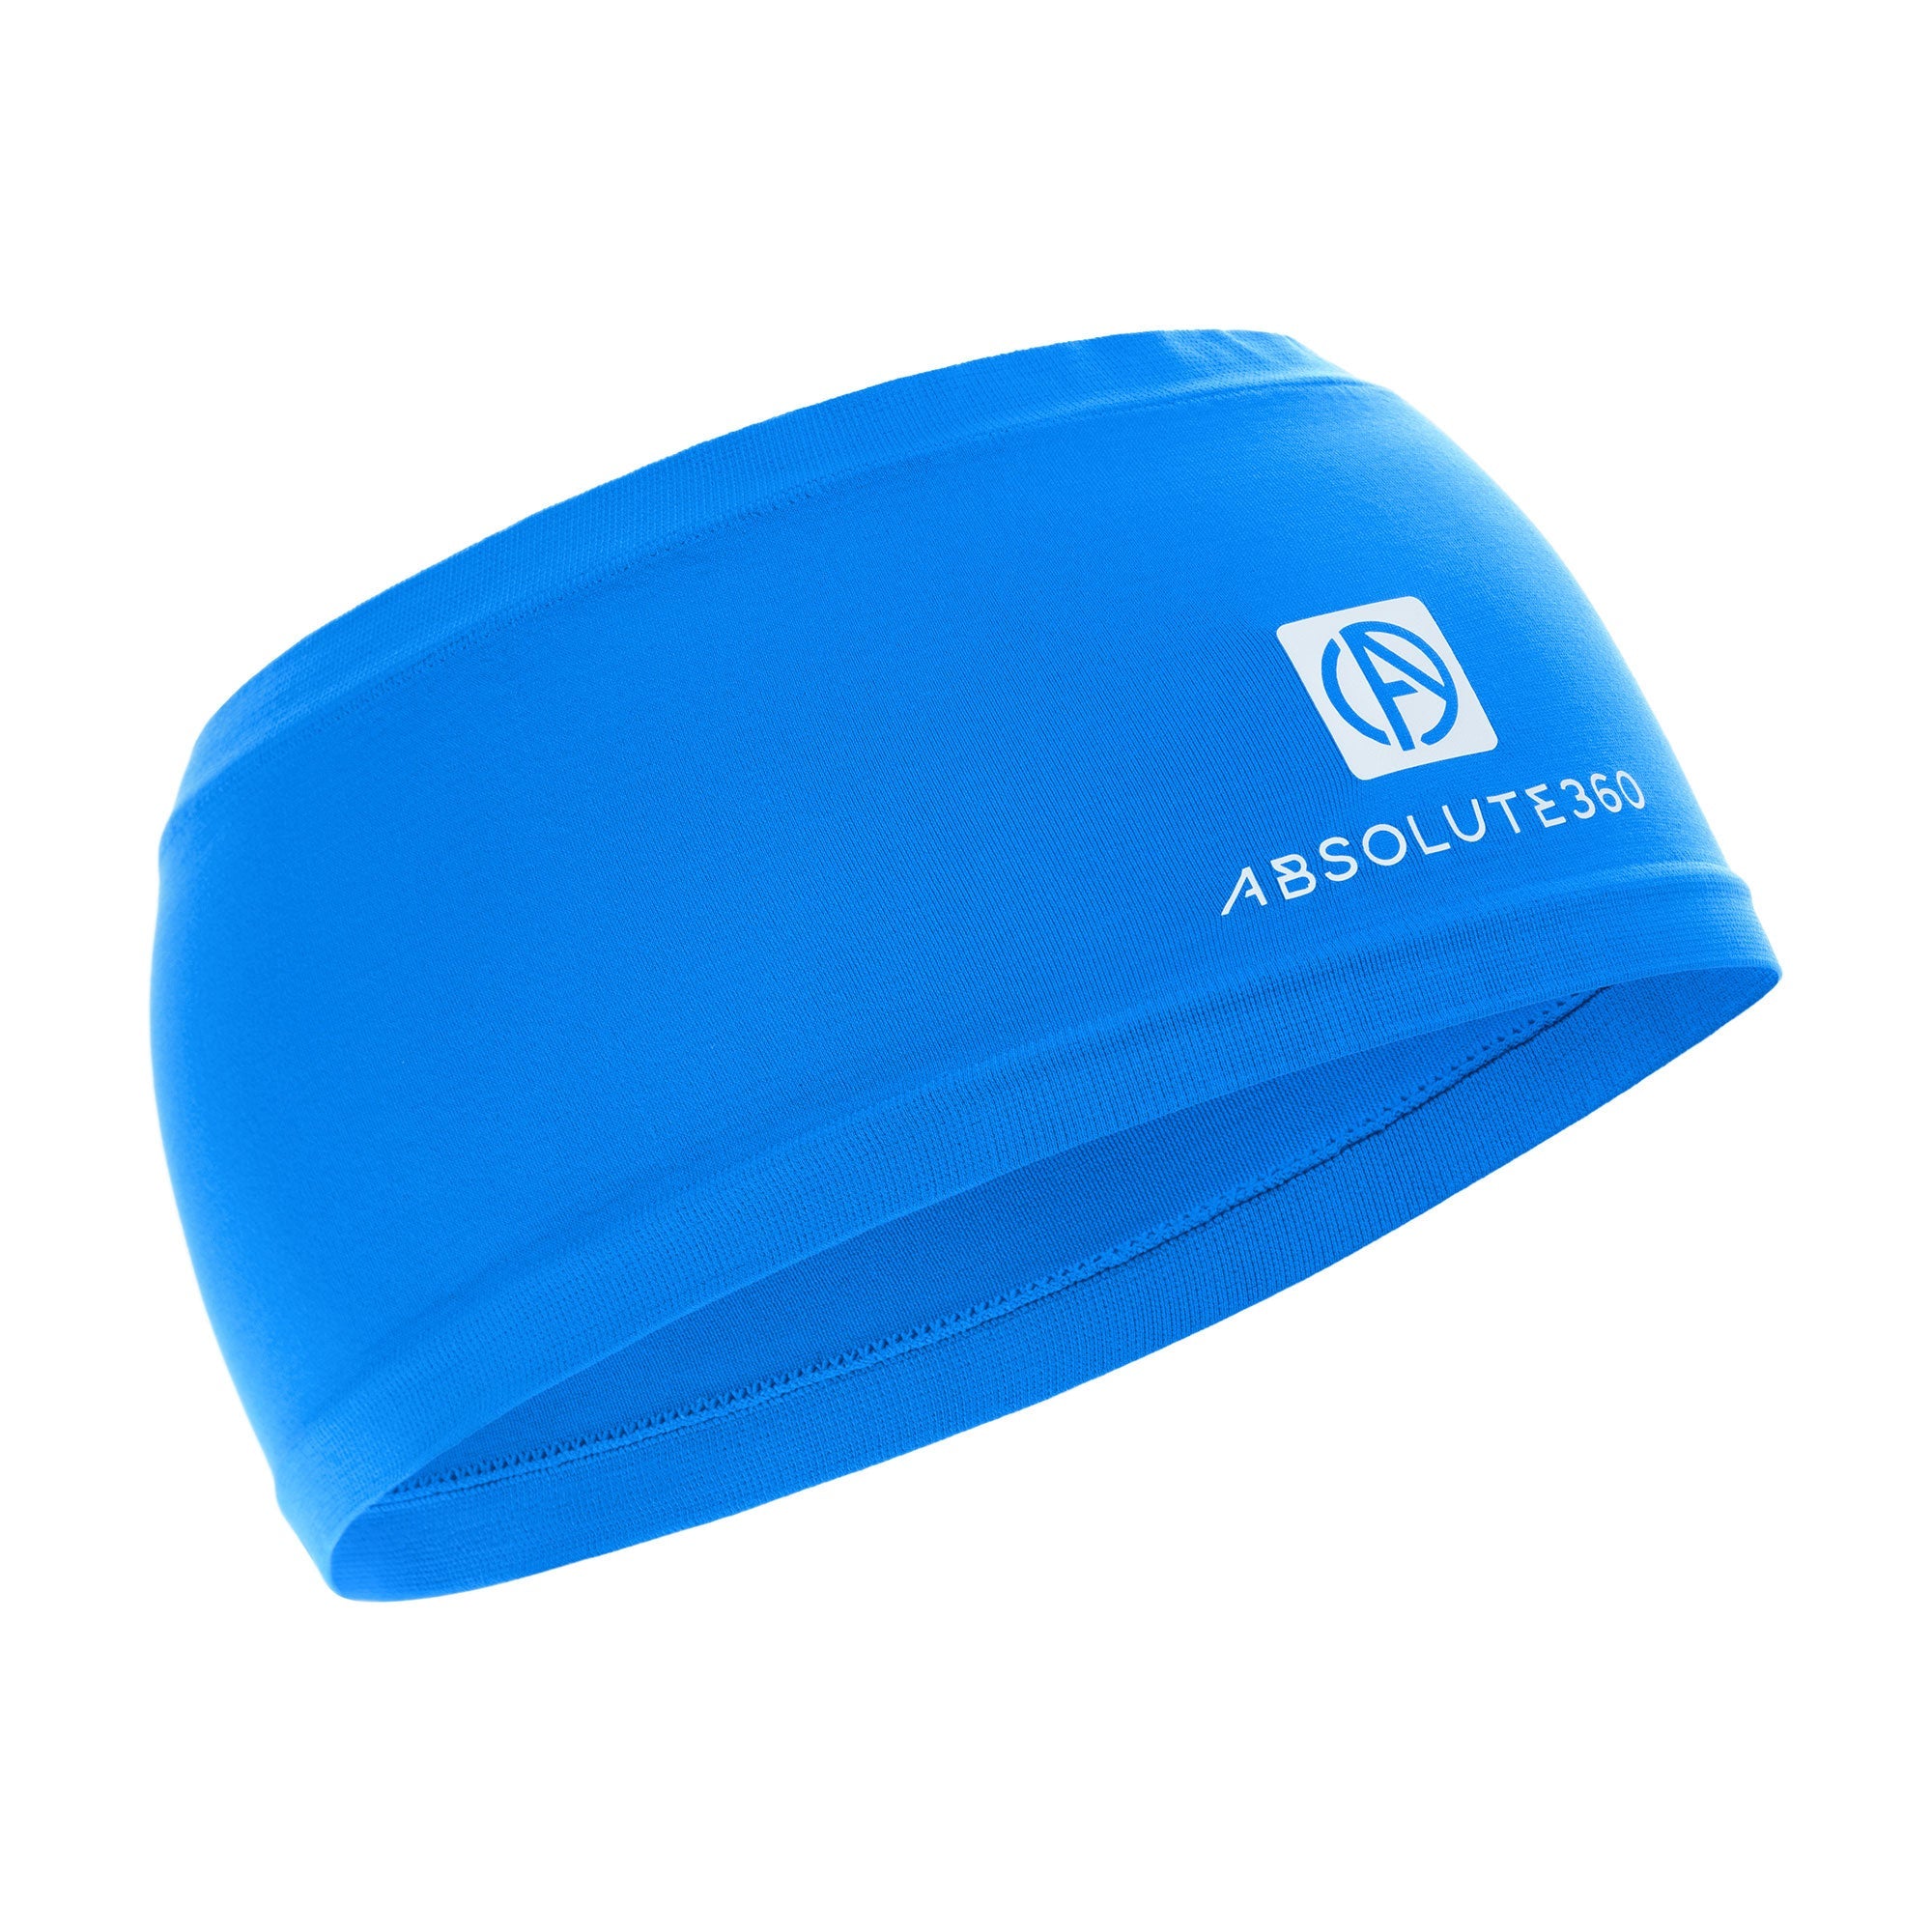 Absolute360 Sports Headband - Sole Mate